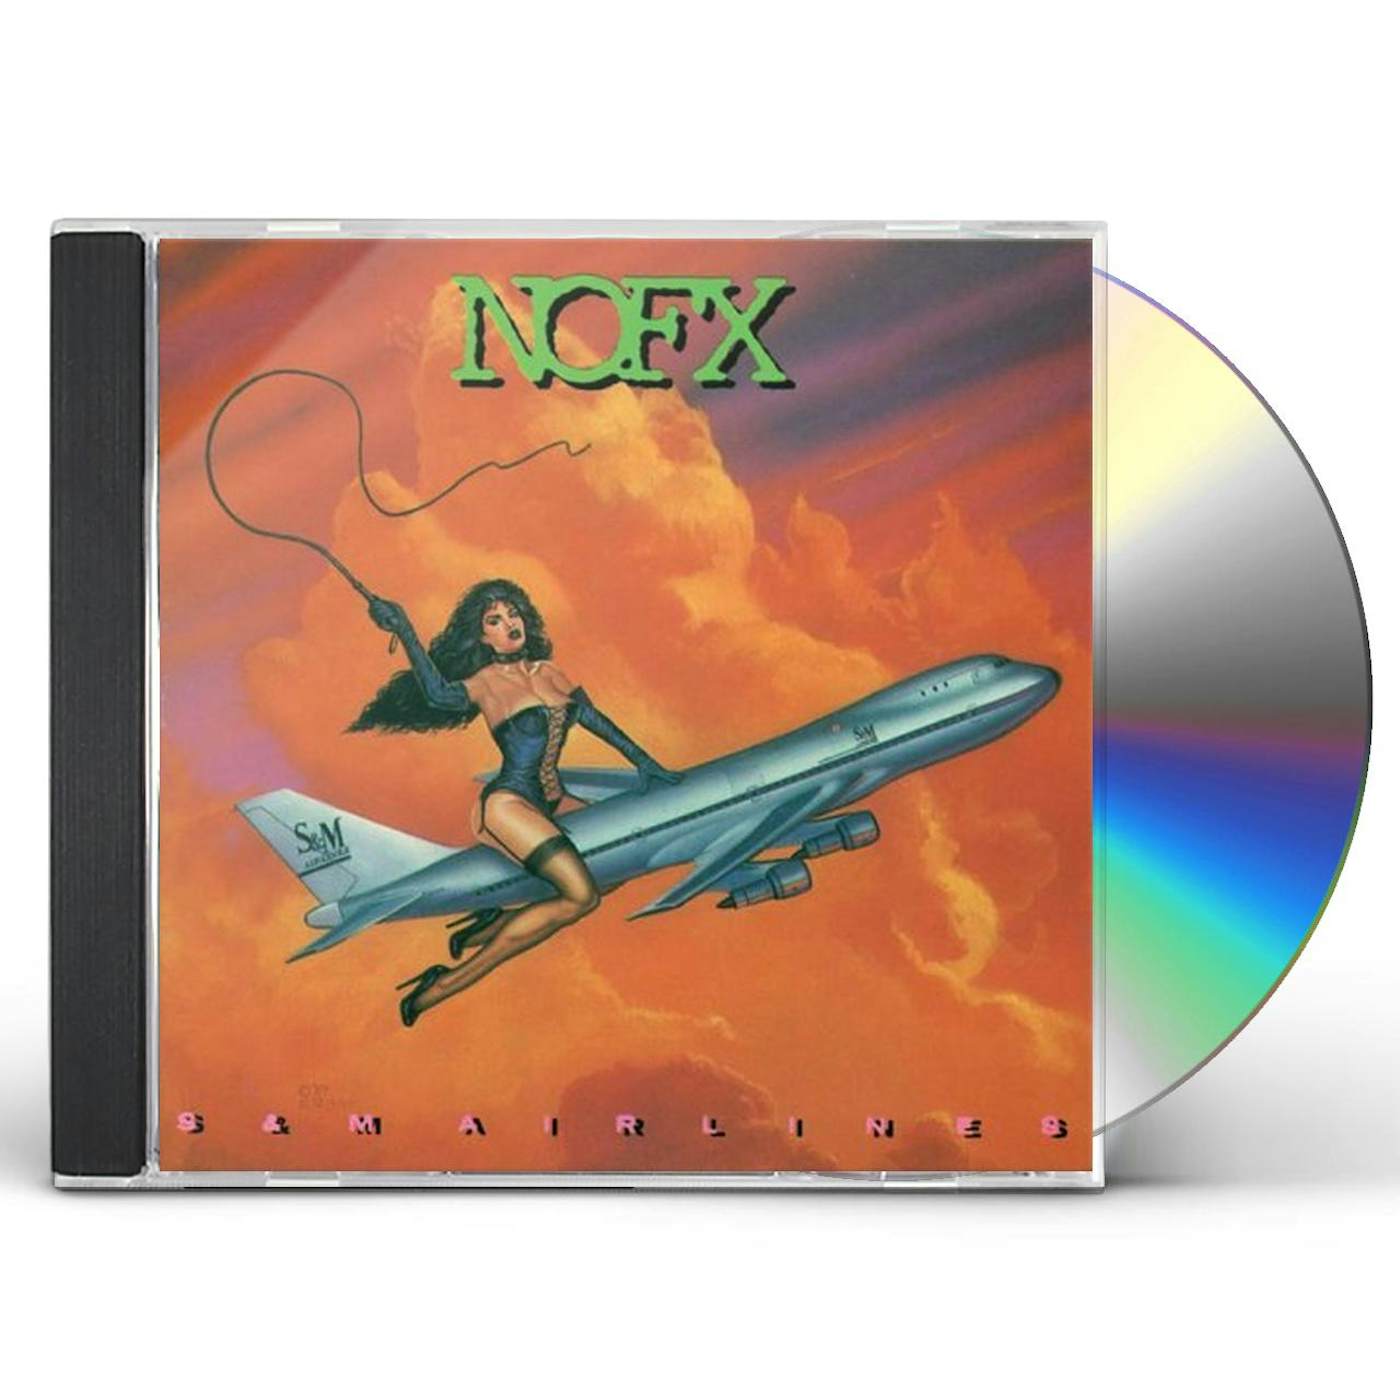 NOFX S & M AIRLINES CD